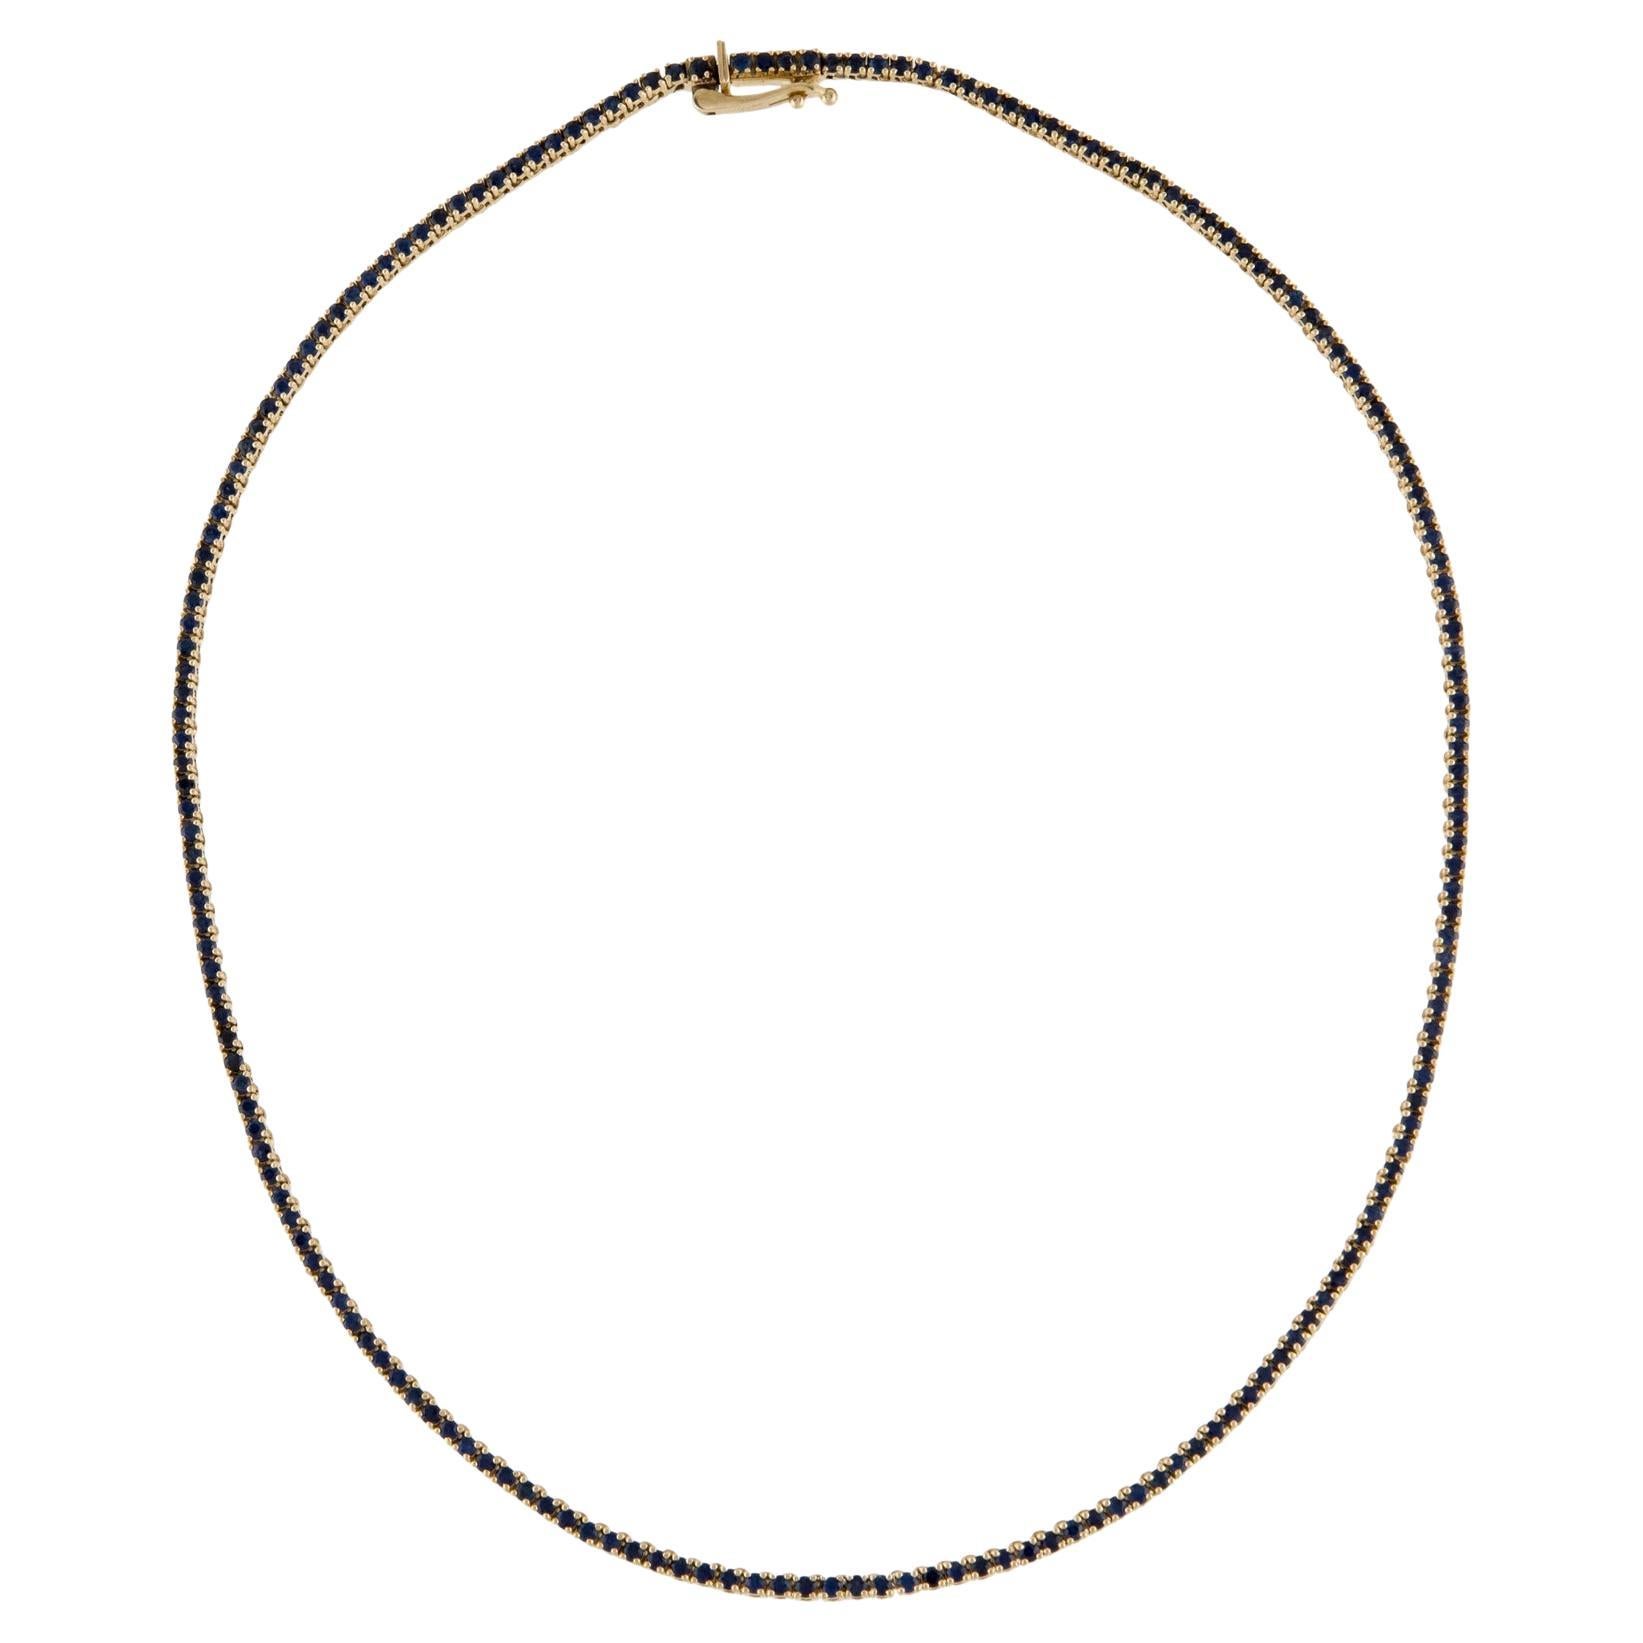 14K 6.47ctw Sapphire Collar Necklace - Exquisite Gemstone Statement Piece For Sale